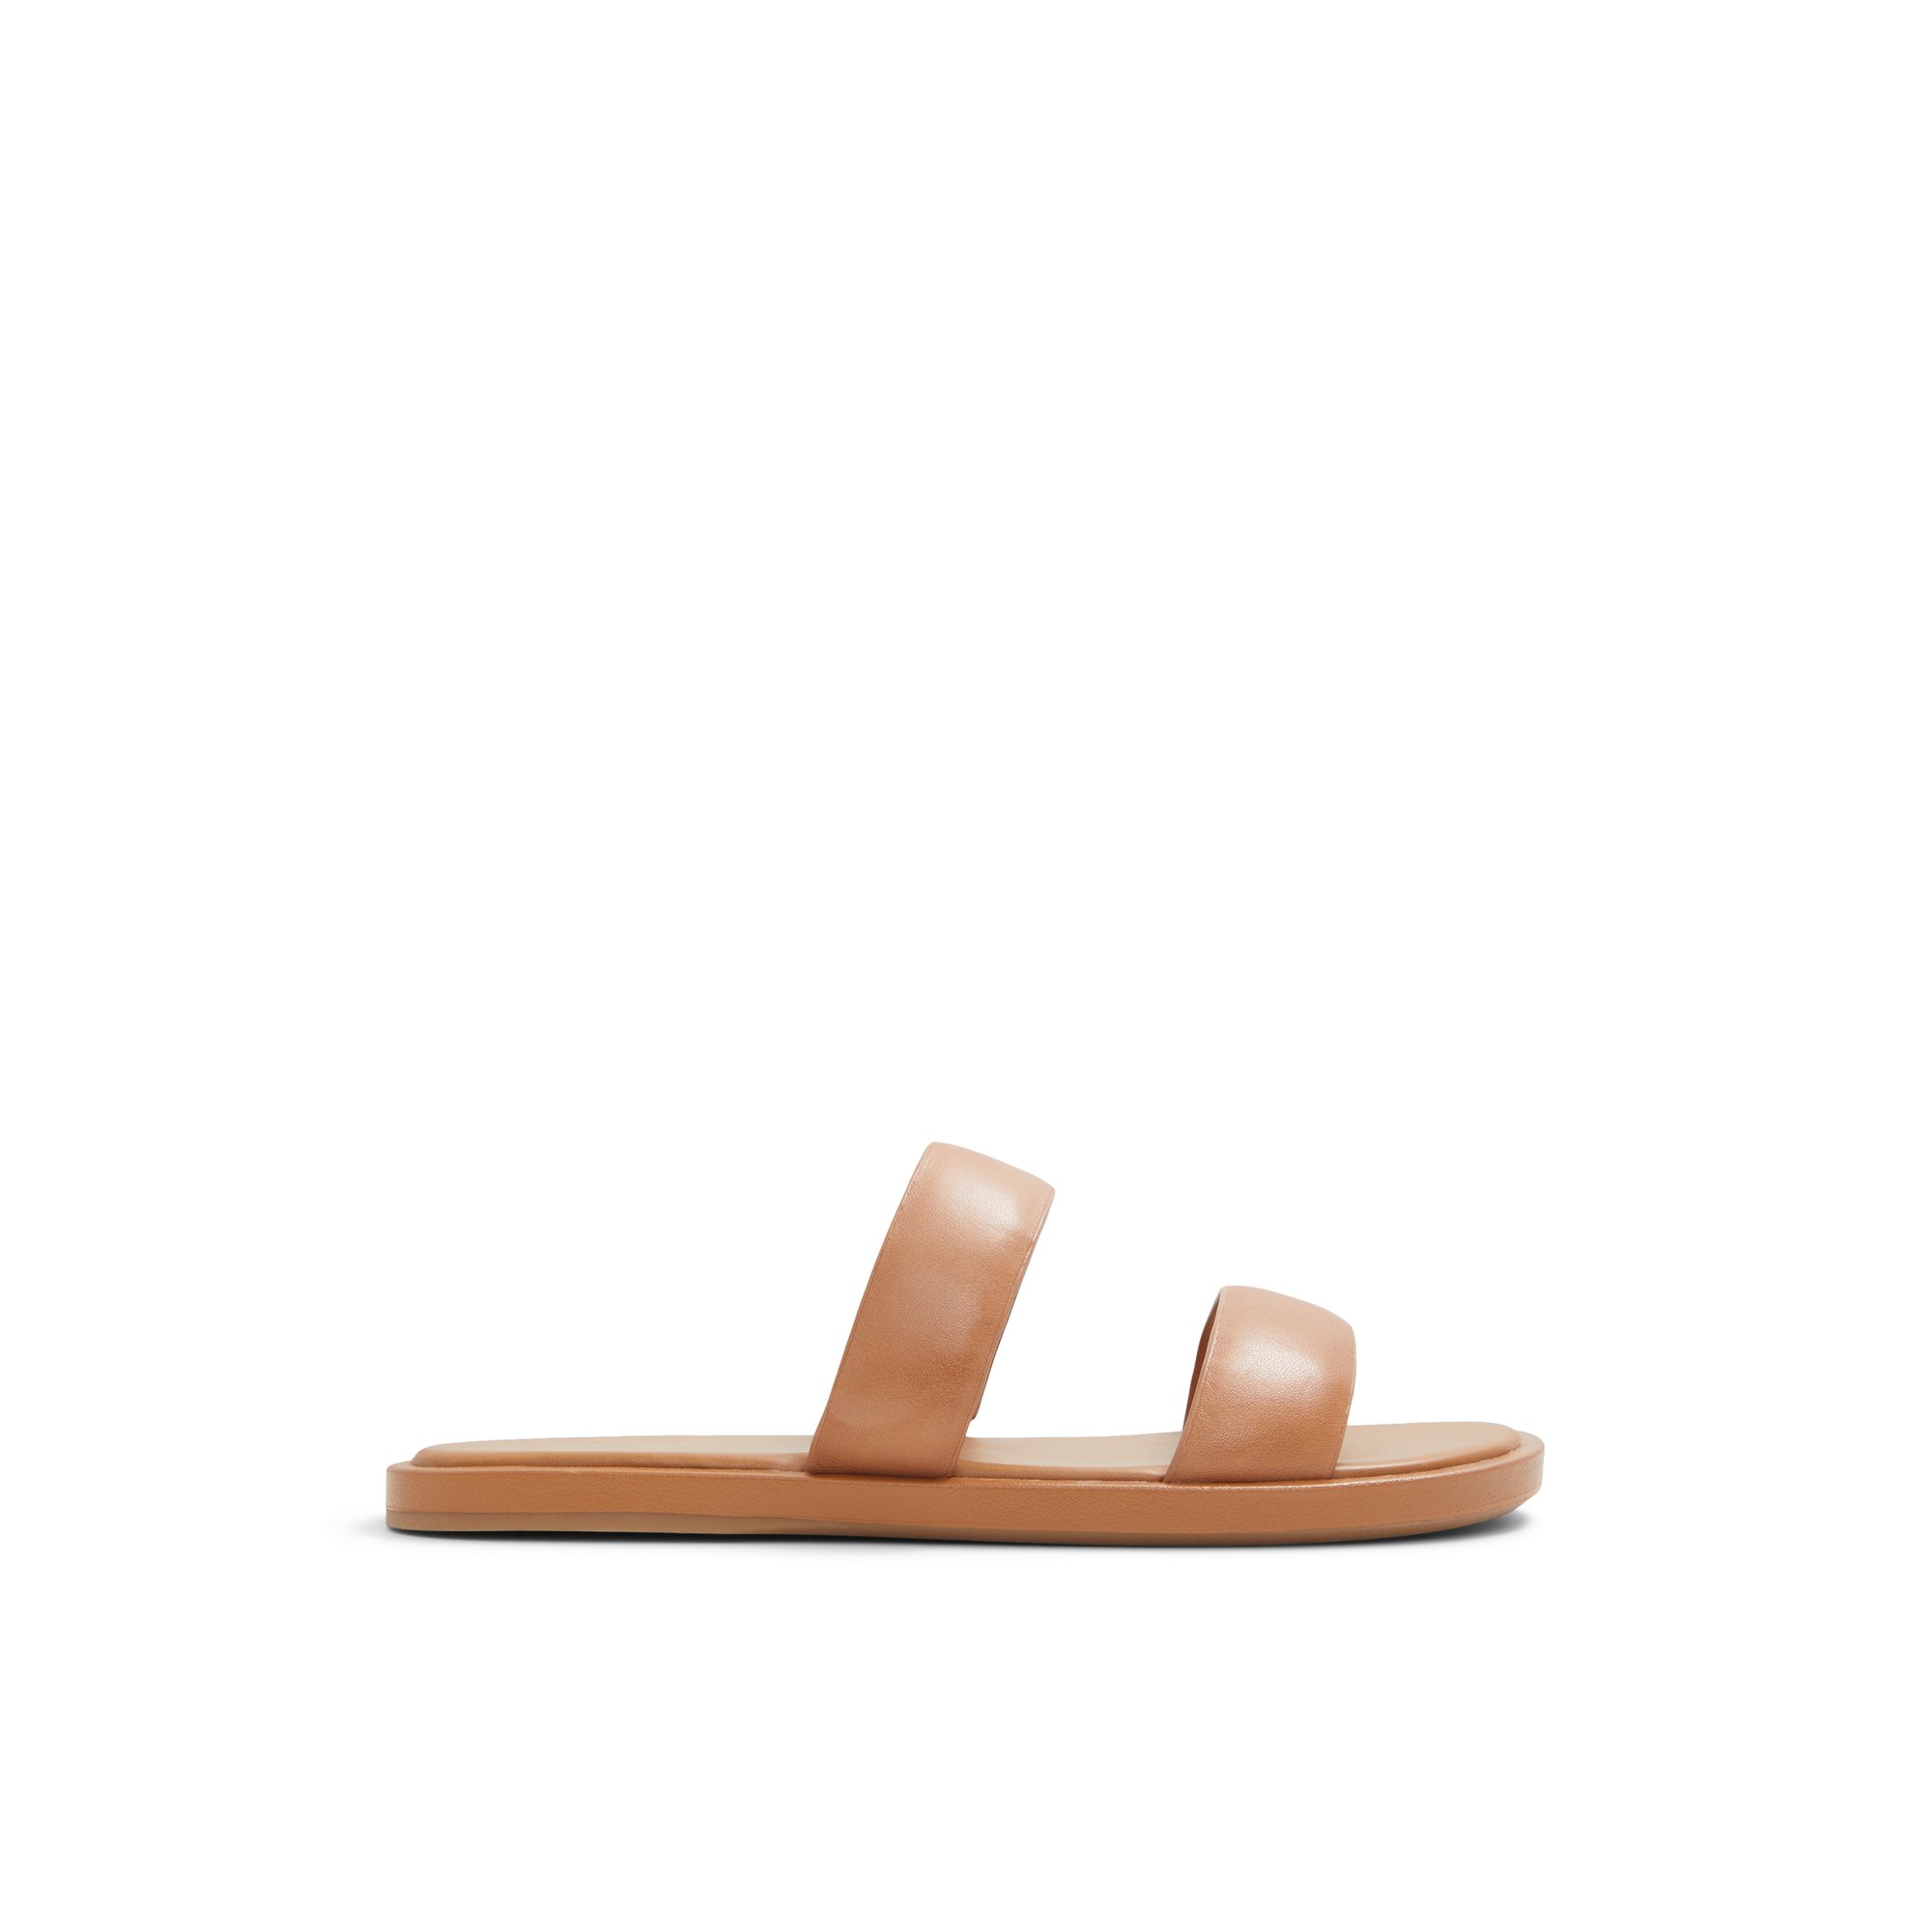 ALDO Krios - Women's Flat Sandals - Beige